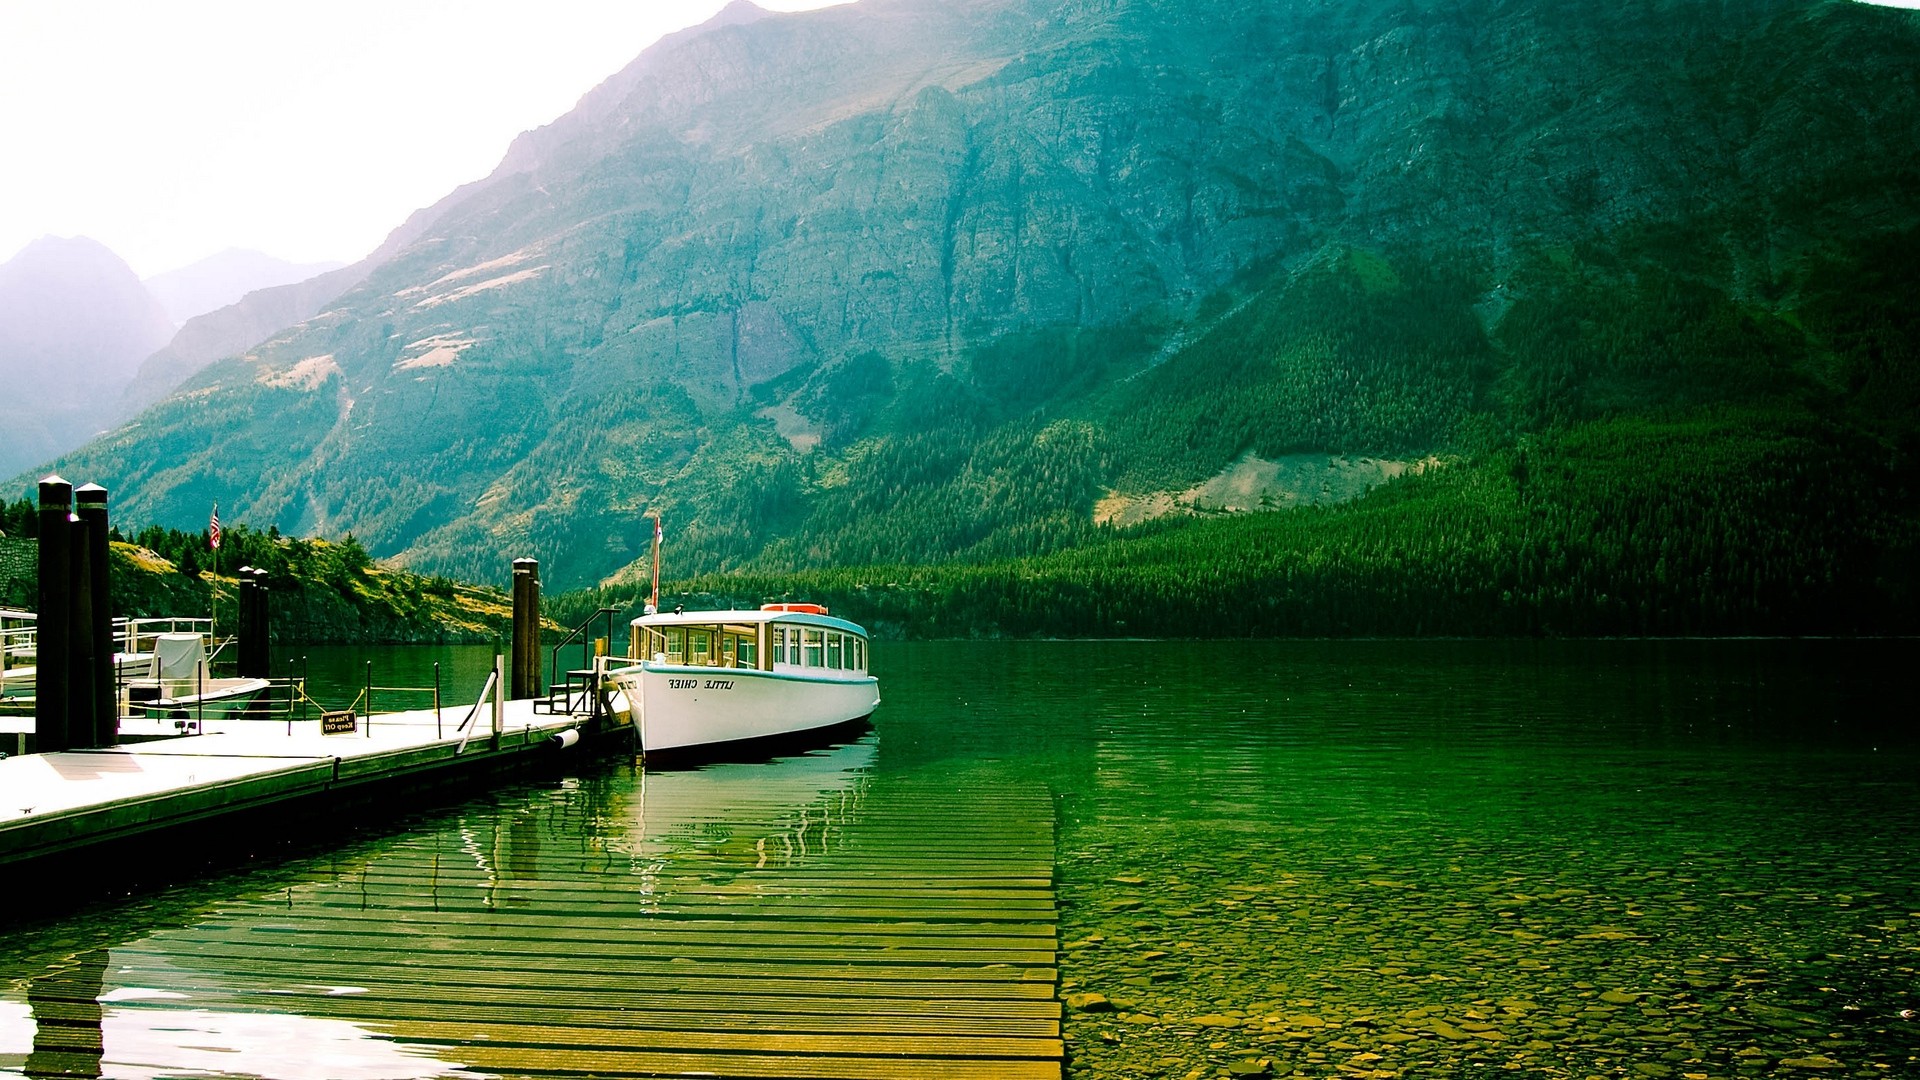 1920x1080 wallpapers: lake, mountains, bottom, transparent, boat, pleasure (image)